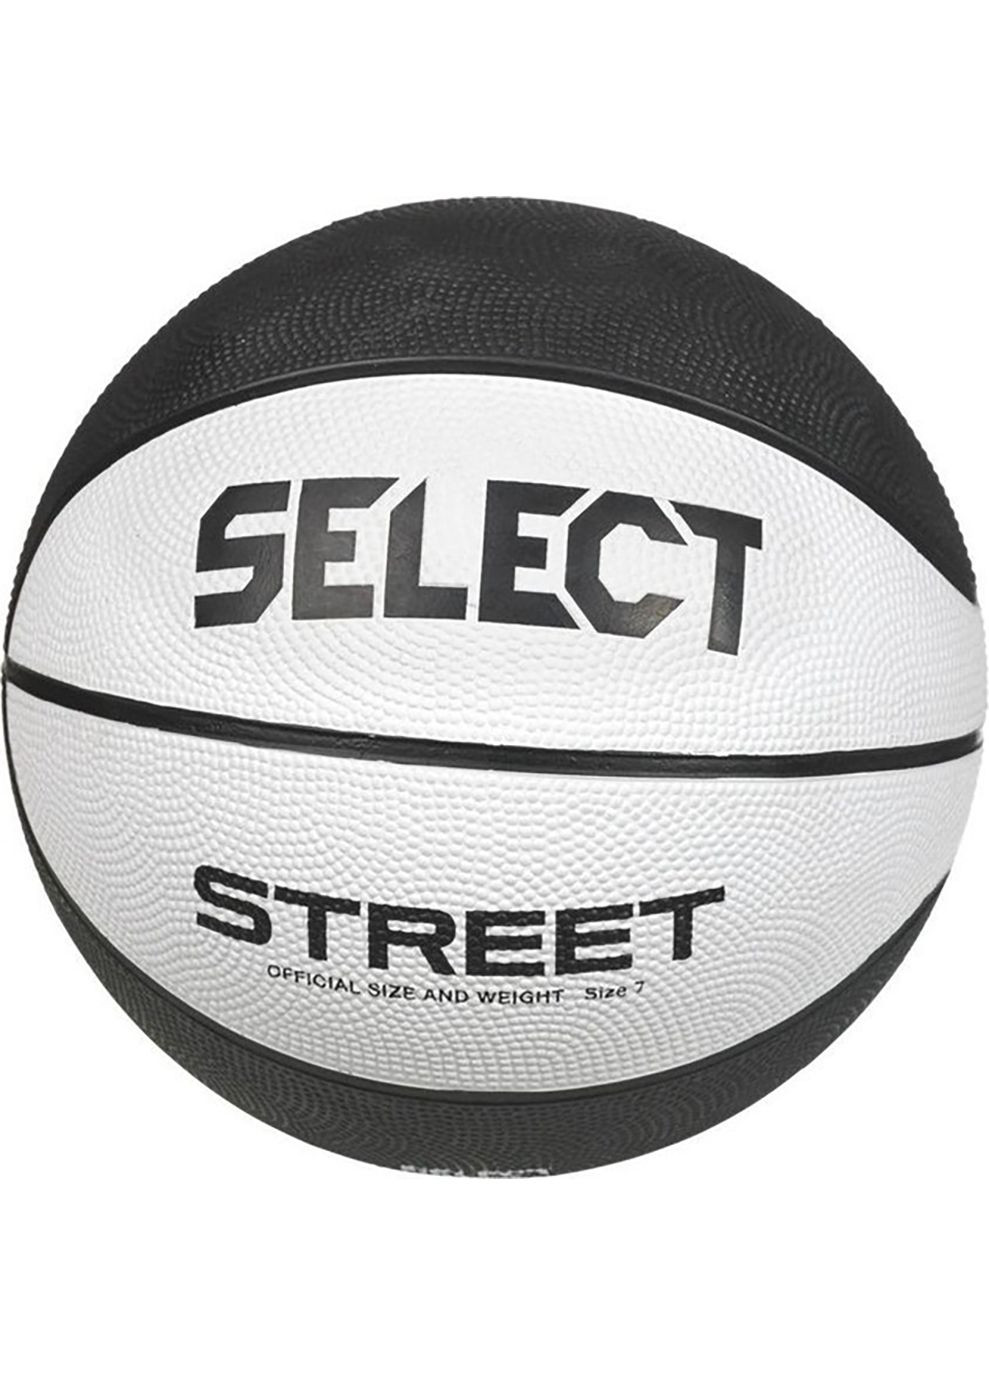 М'яч баскетбольний BASKETBALL STREET v23 біло-чорний Уні 5 Select (268746965)